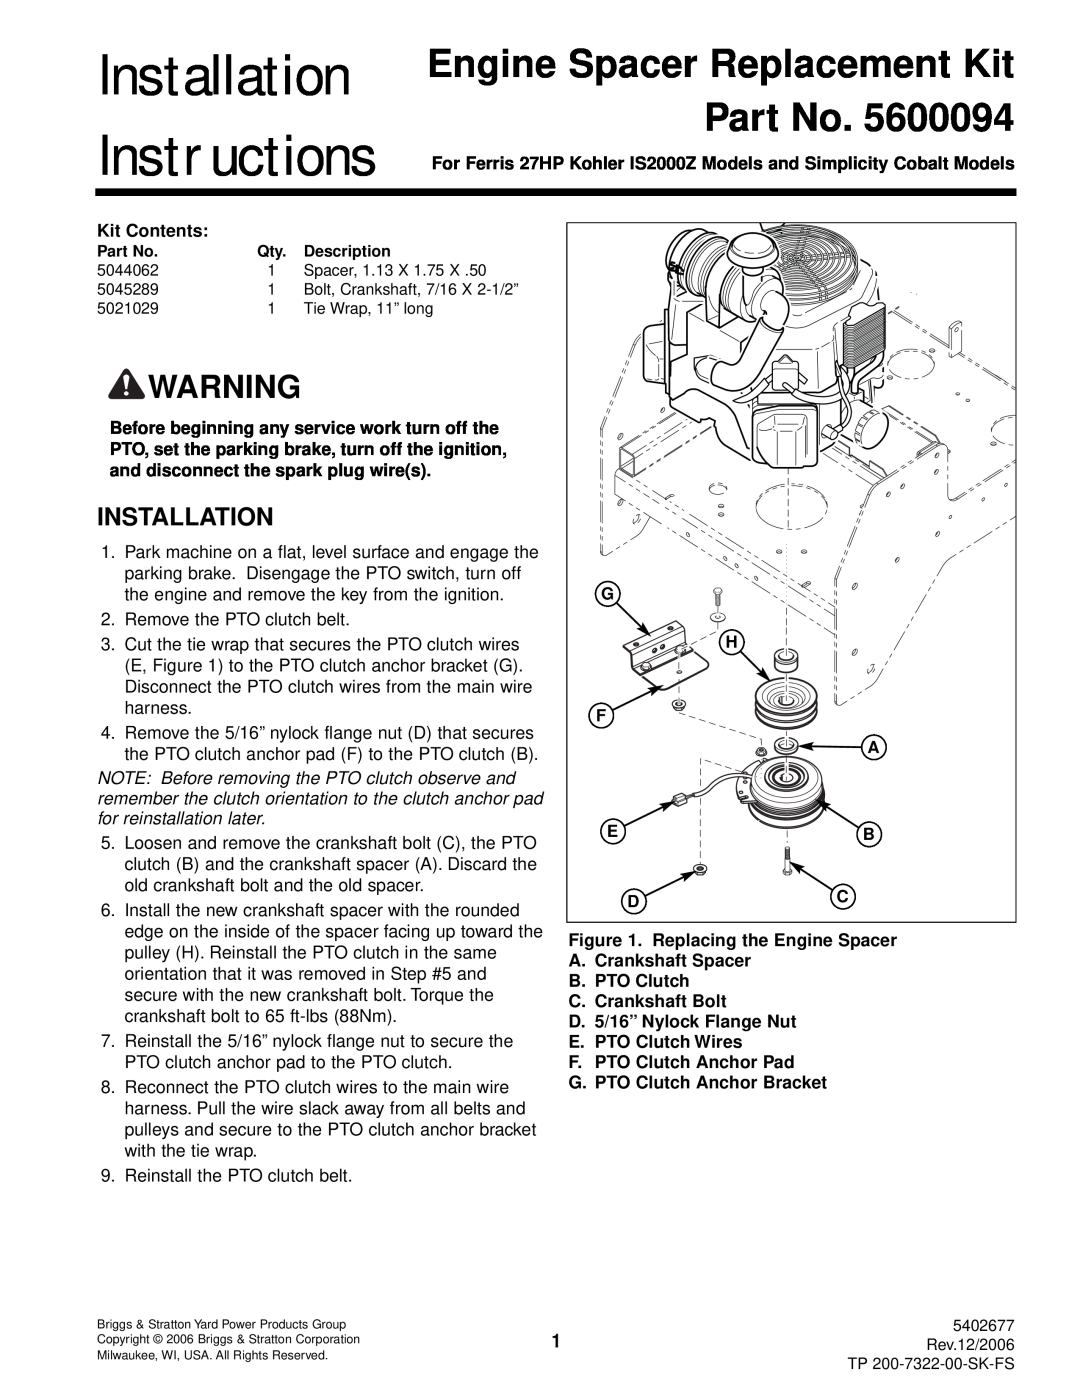 Briggs & Stratton IS2000Z installation instructions Installation Instructions, Engine Spacer Replacement Kit Part No 